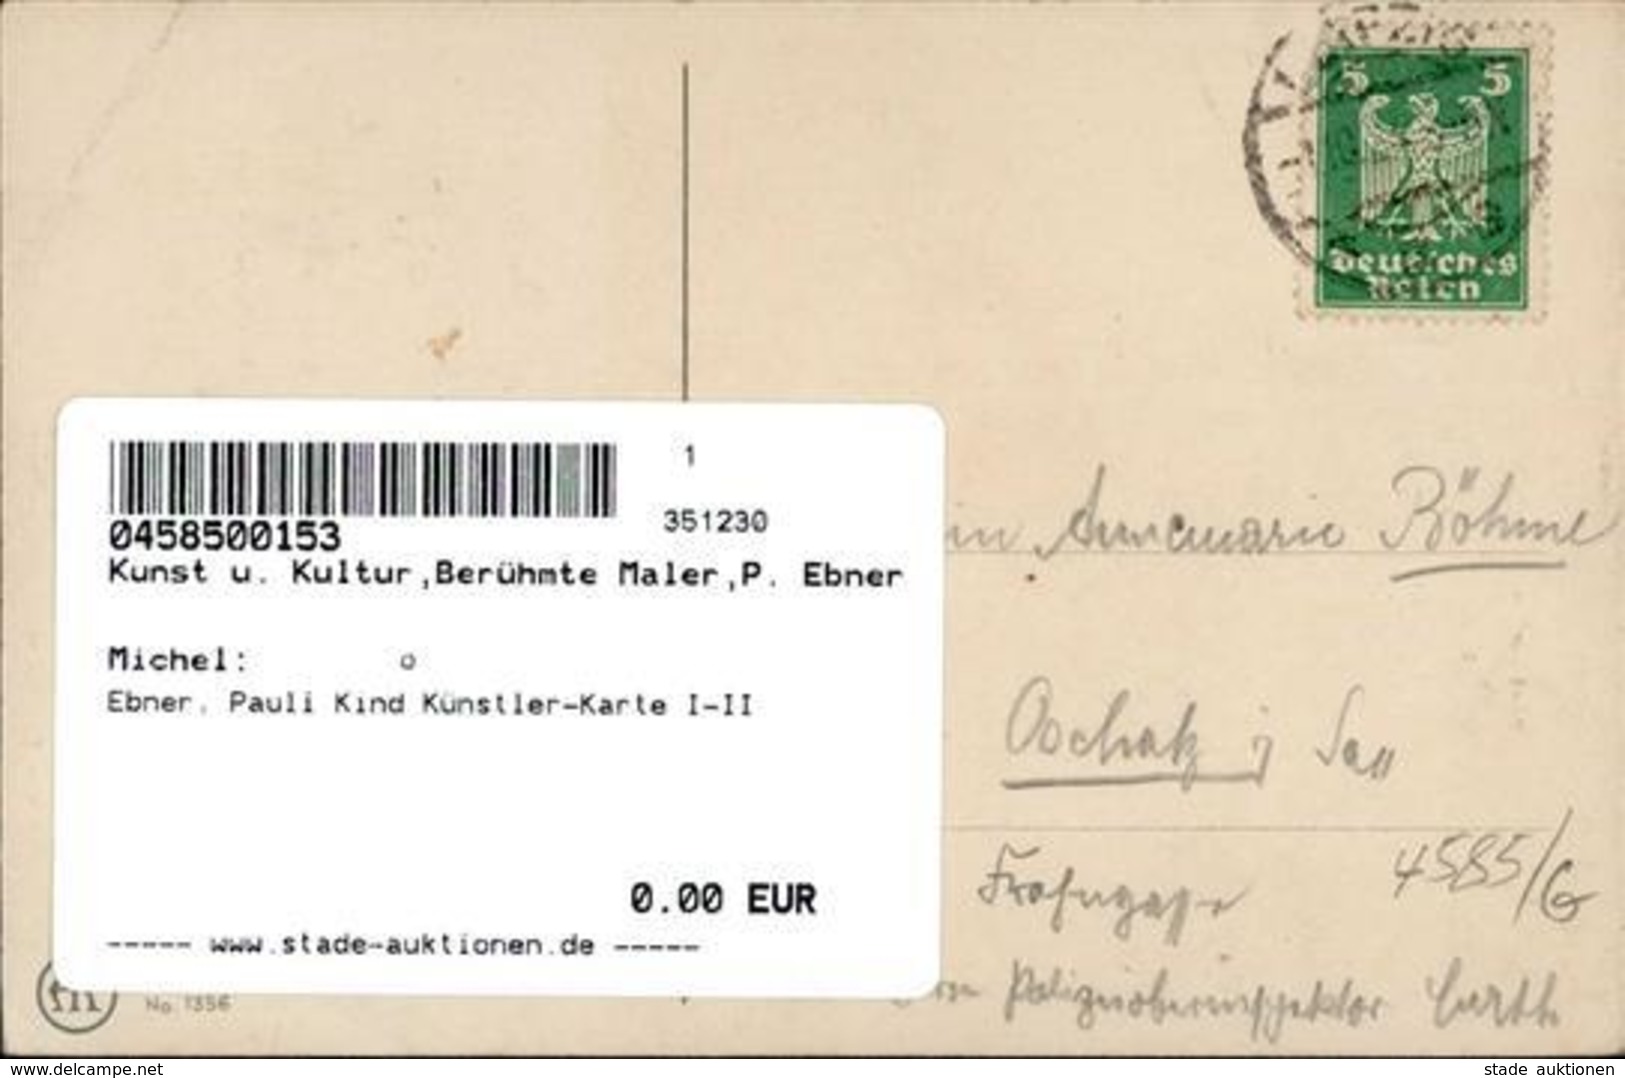 Ebner, Pauli Kind Künstler-Karte I-II - Ebner, Pauli